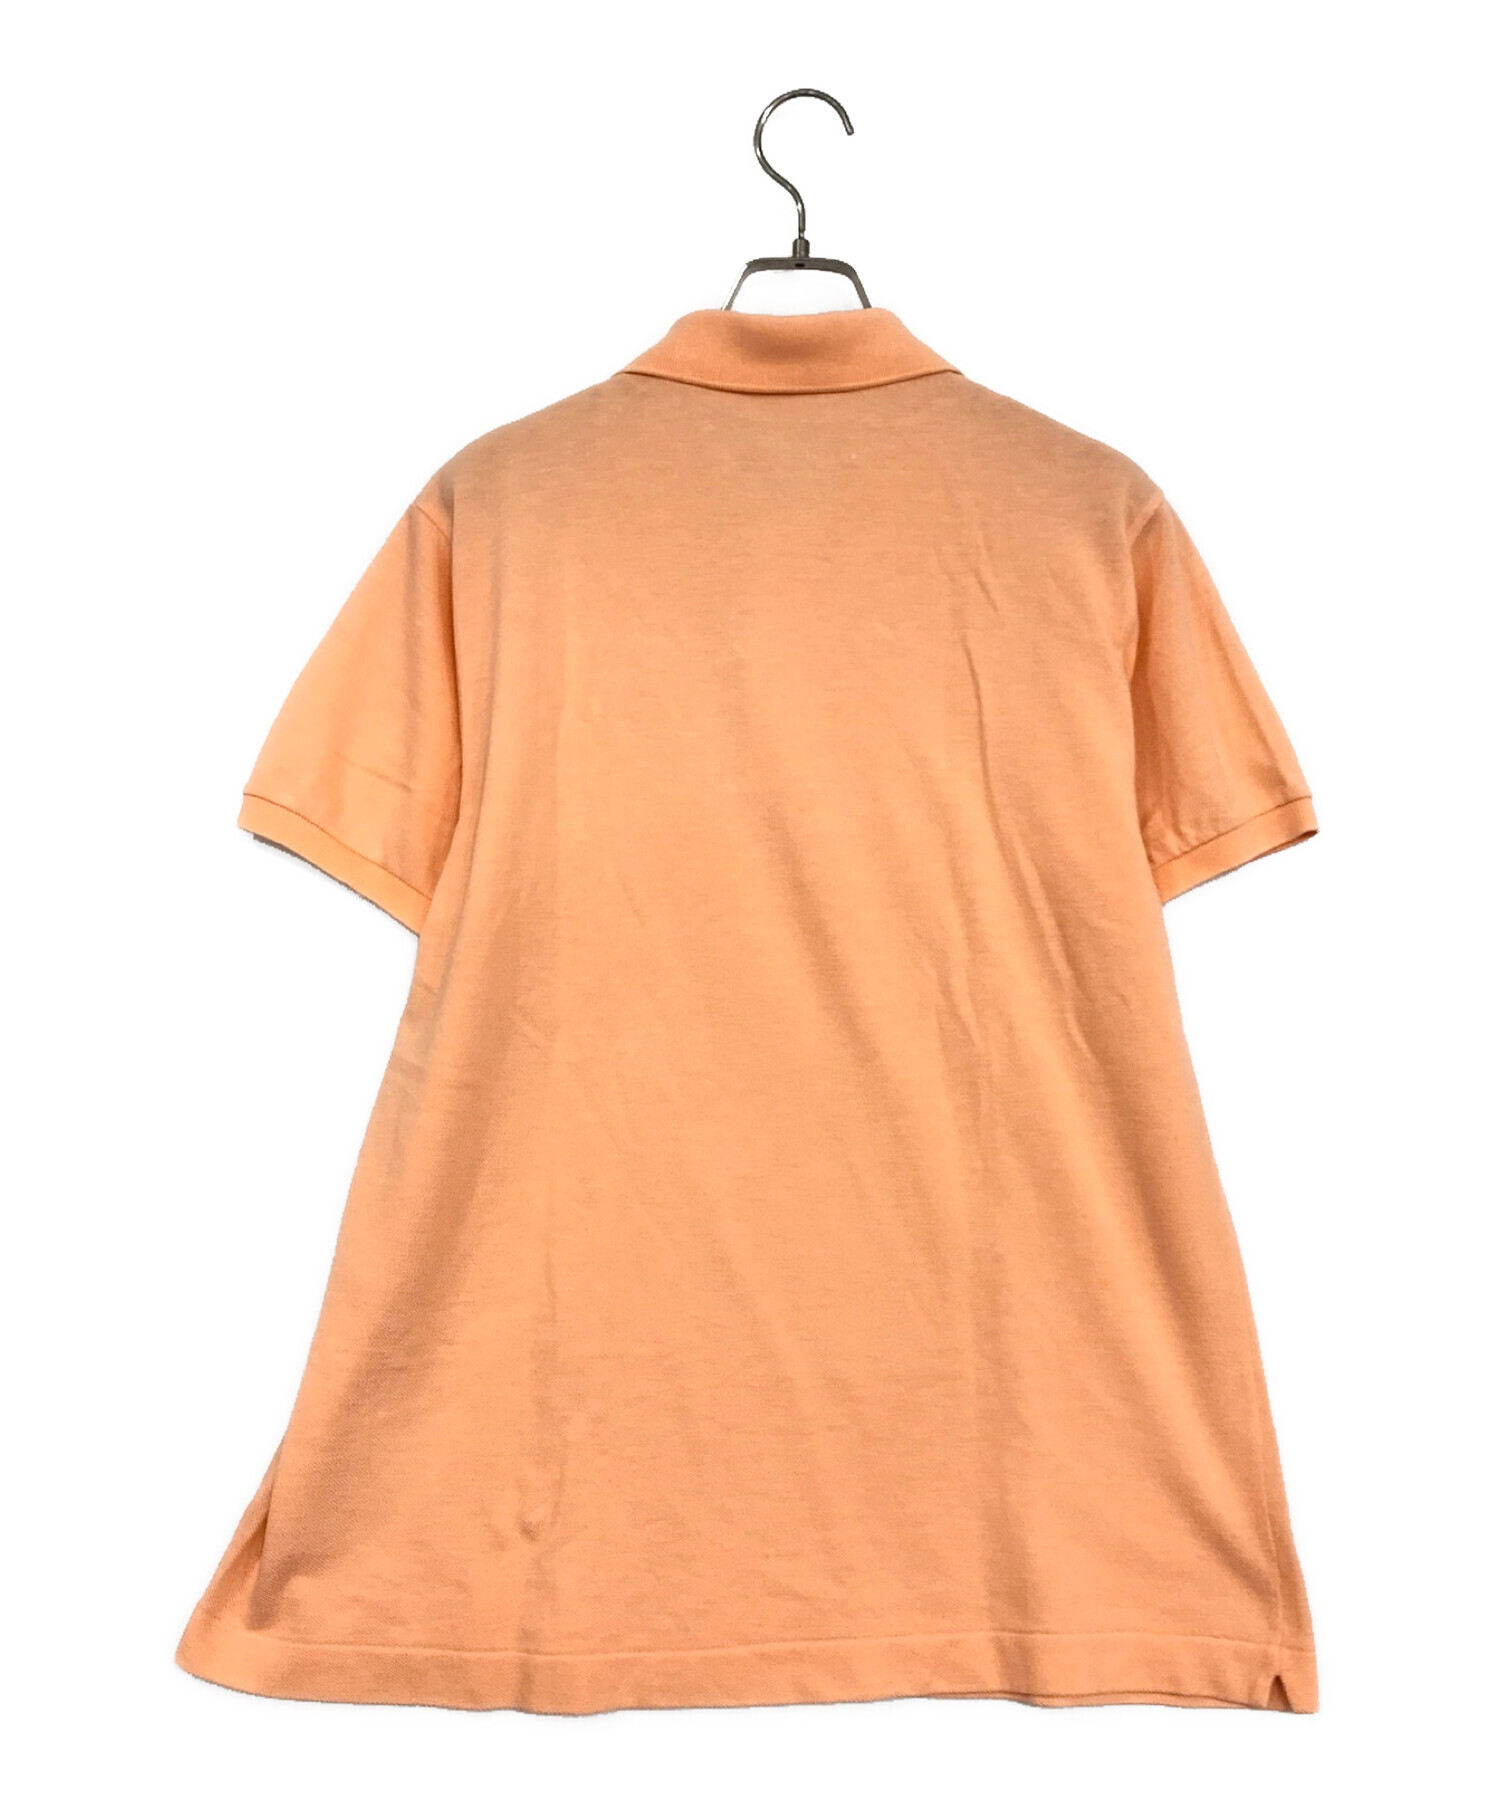 CHEMISE LACOSTE (シュミーズ ラコステ) ポロシャツ オレンジ サイズ:SIZE 4